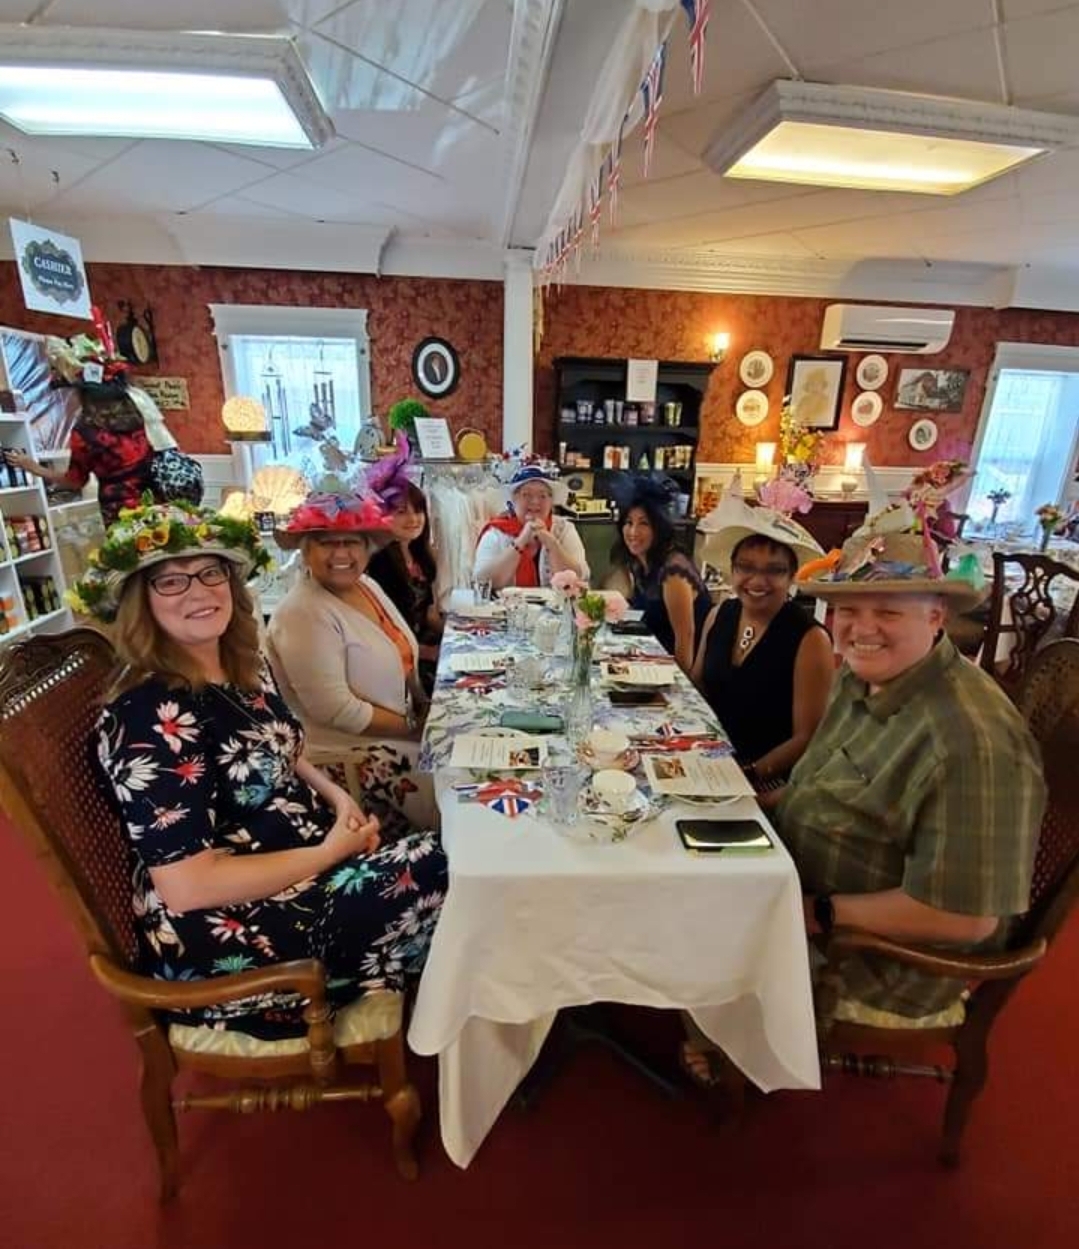 Tea guests enjoying the British tea room, Sweet Peas Tea Room, in Battle Ground, Washington. Photo courtesy of Sweet Peas Tea Room.